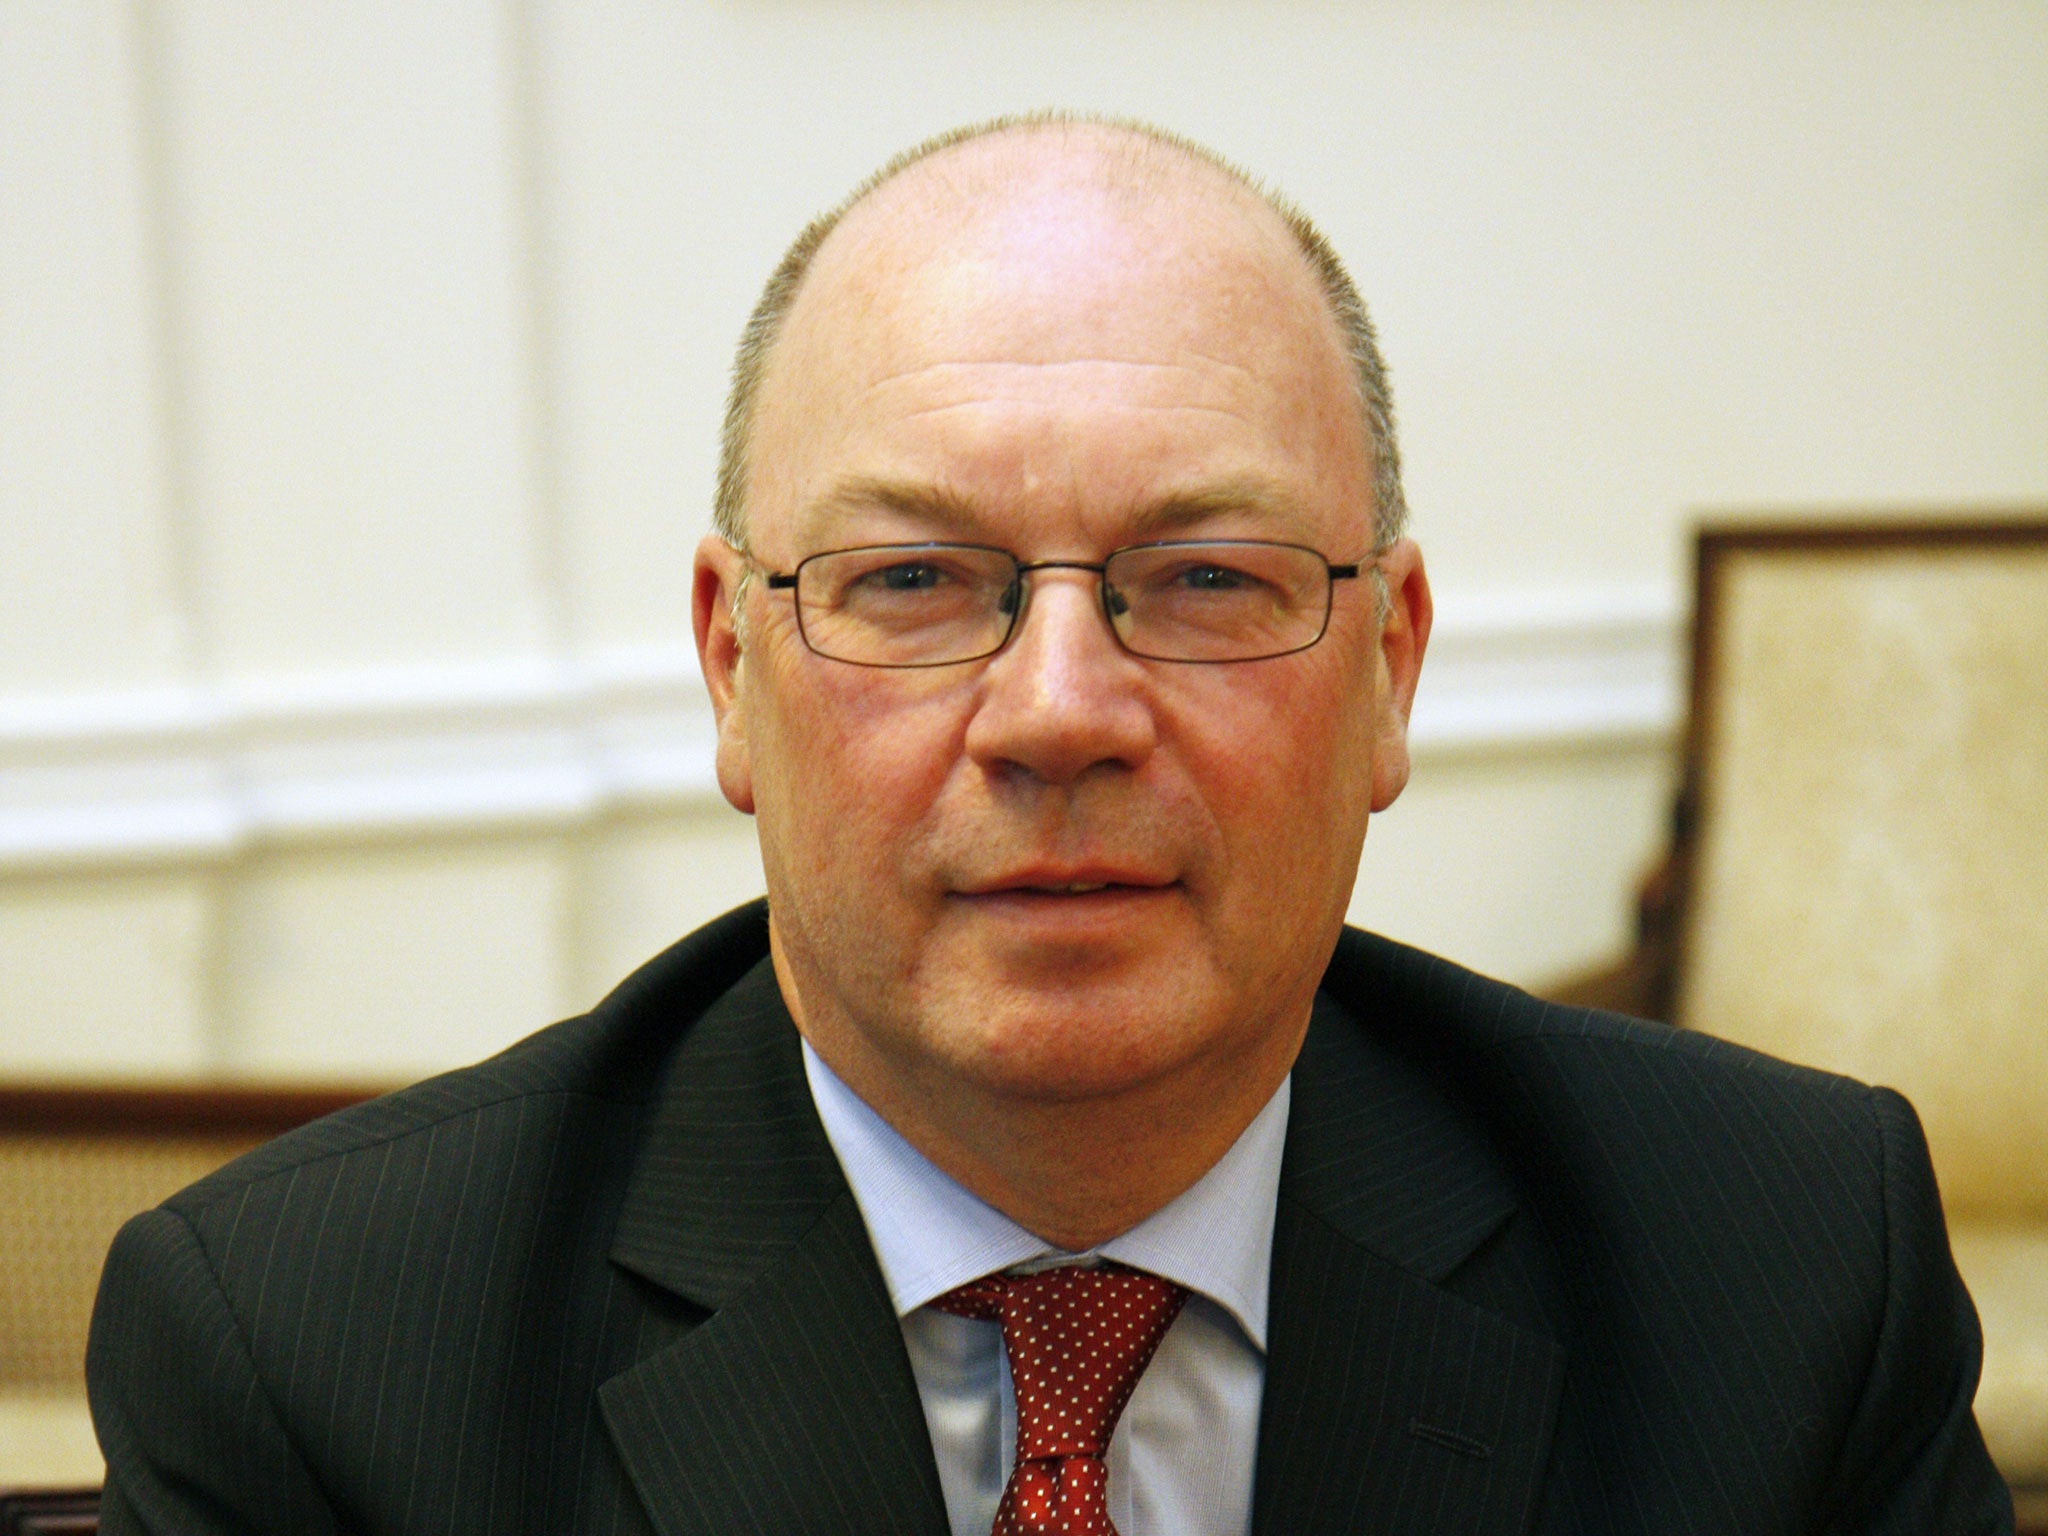 Ex-minister Alistair Burt